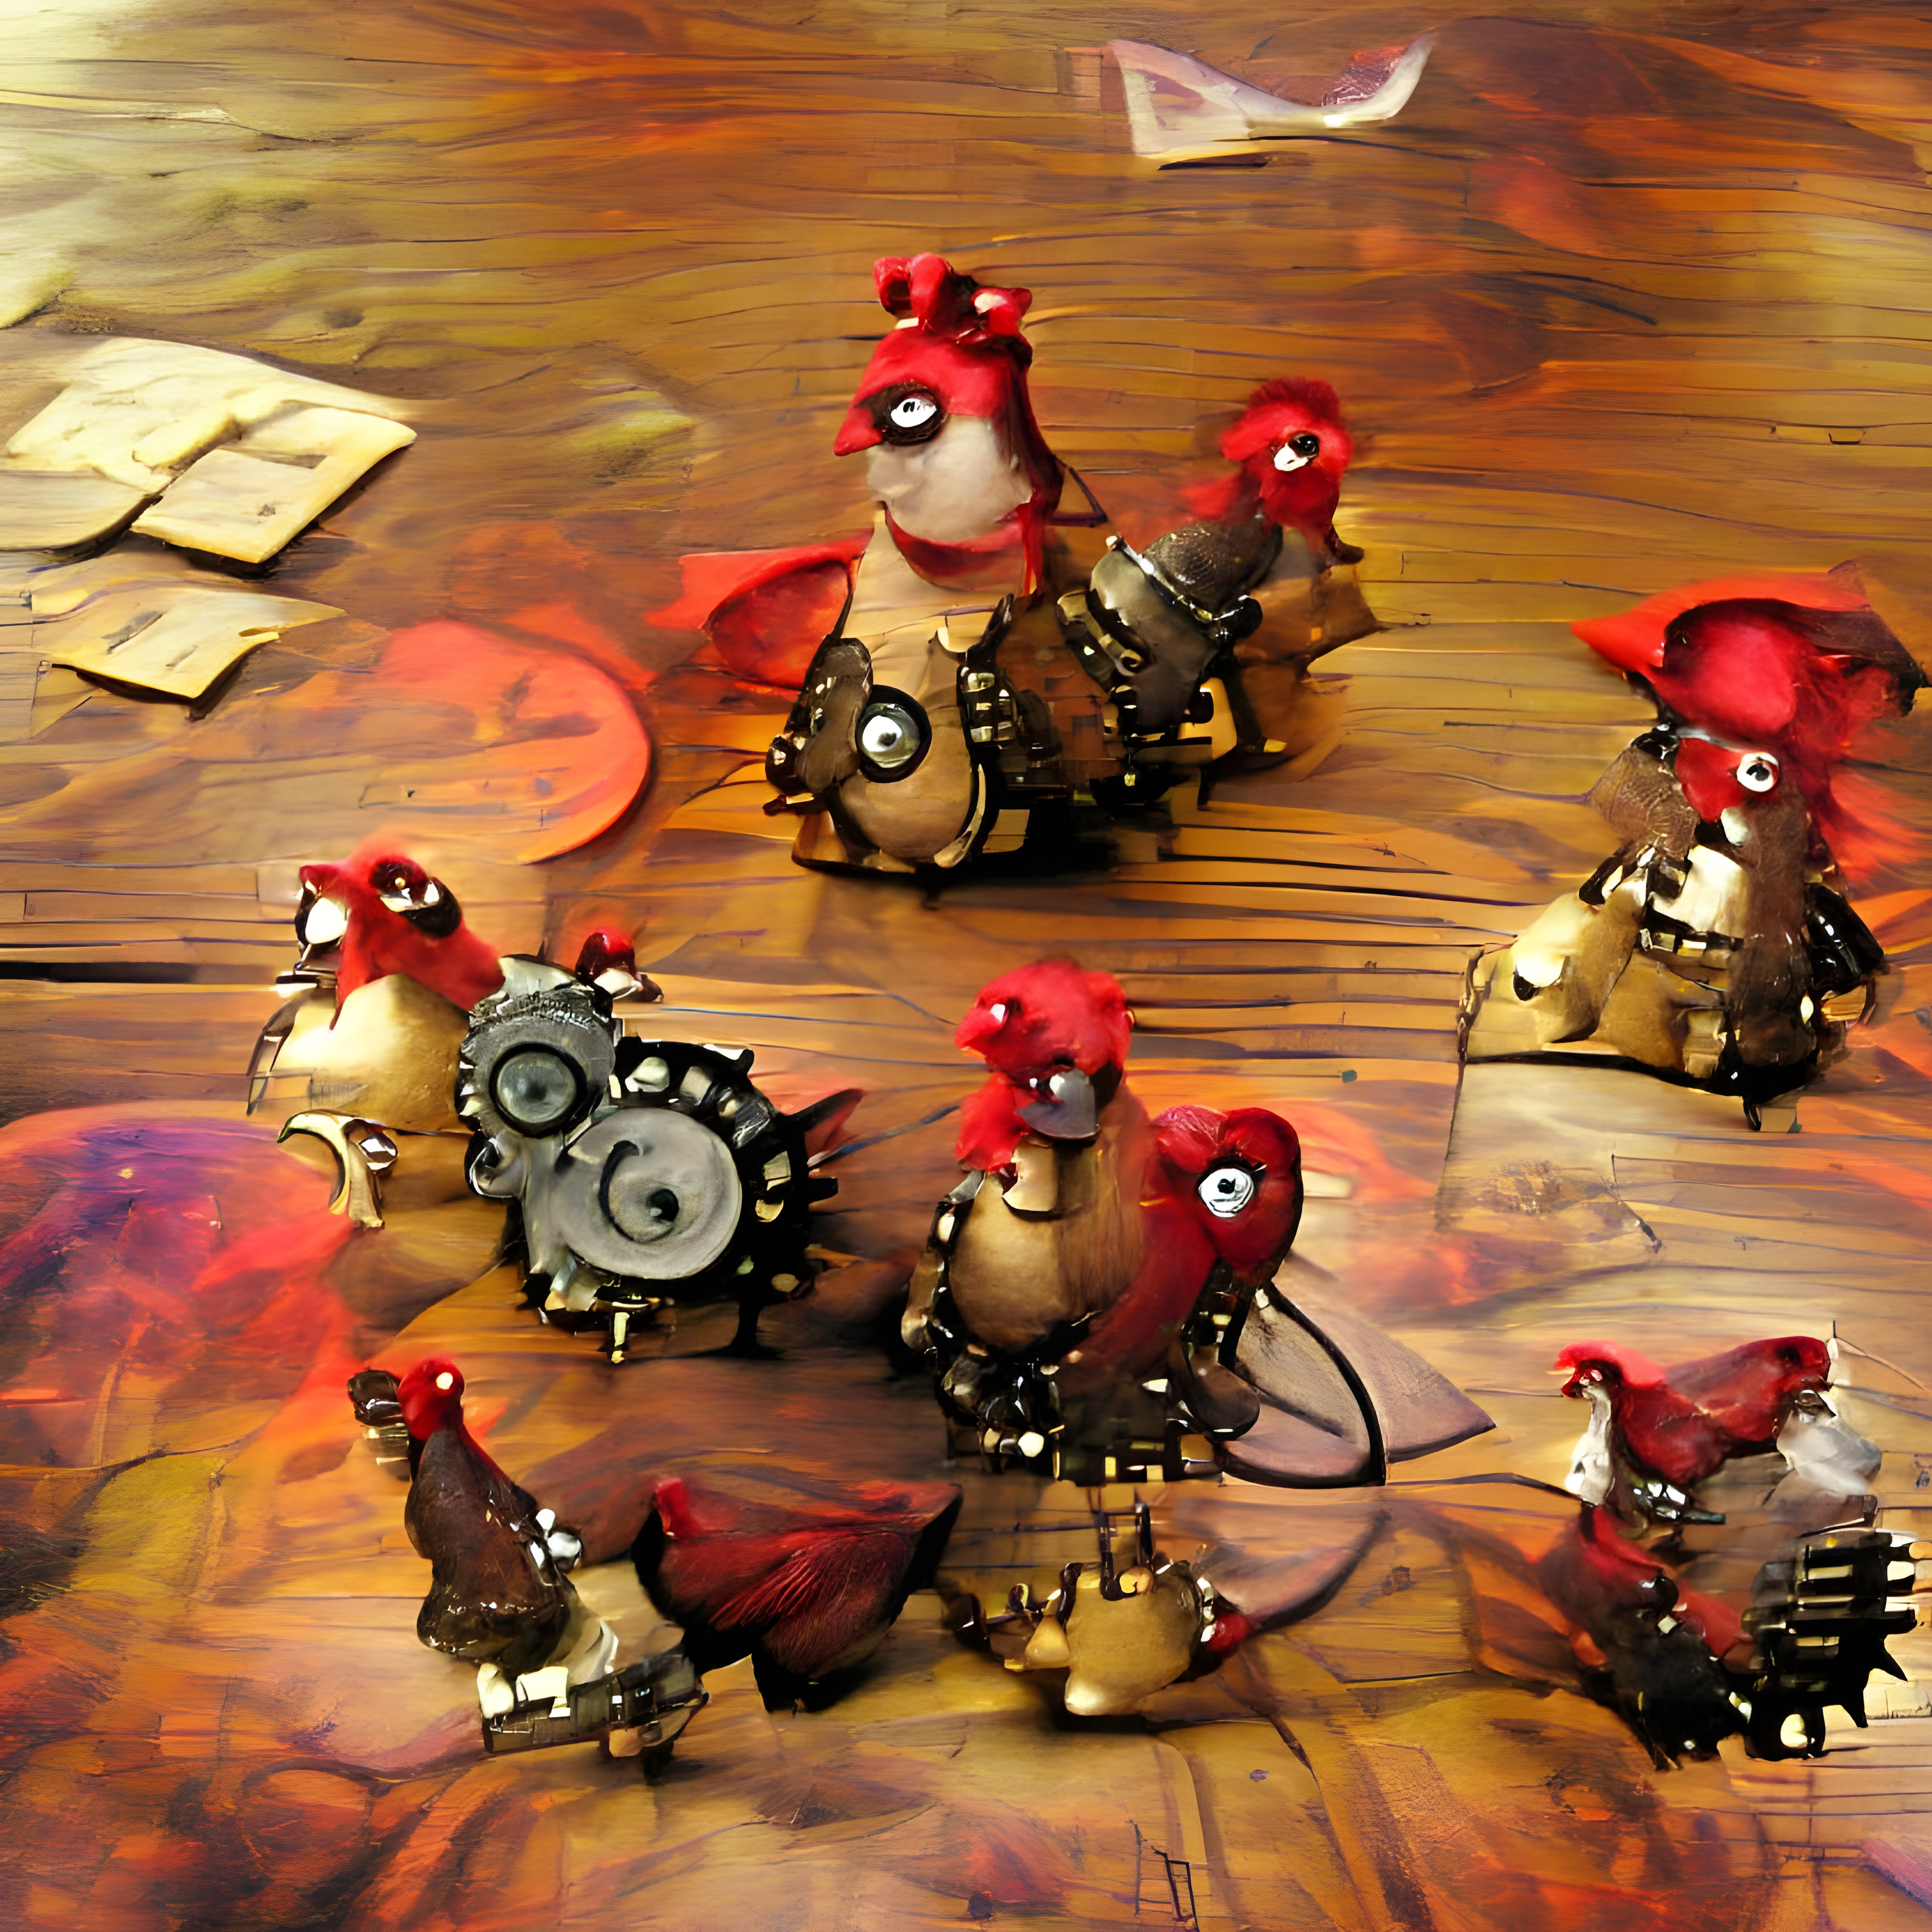 The Chicken Gang